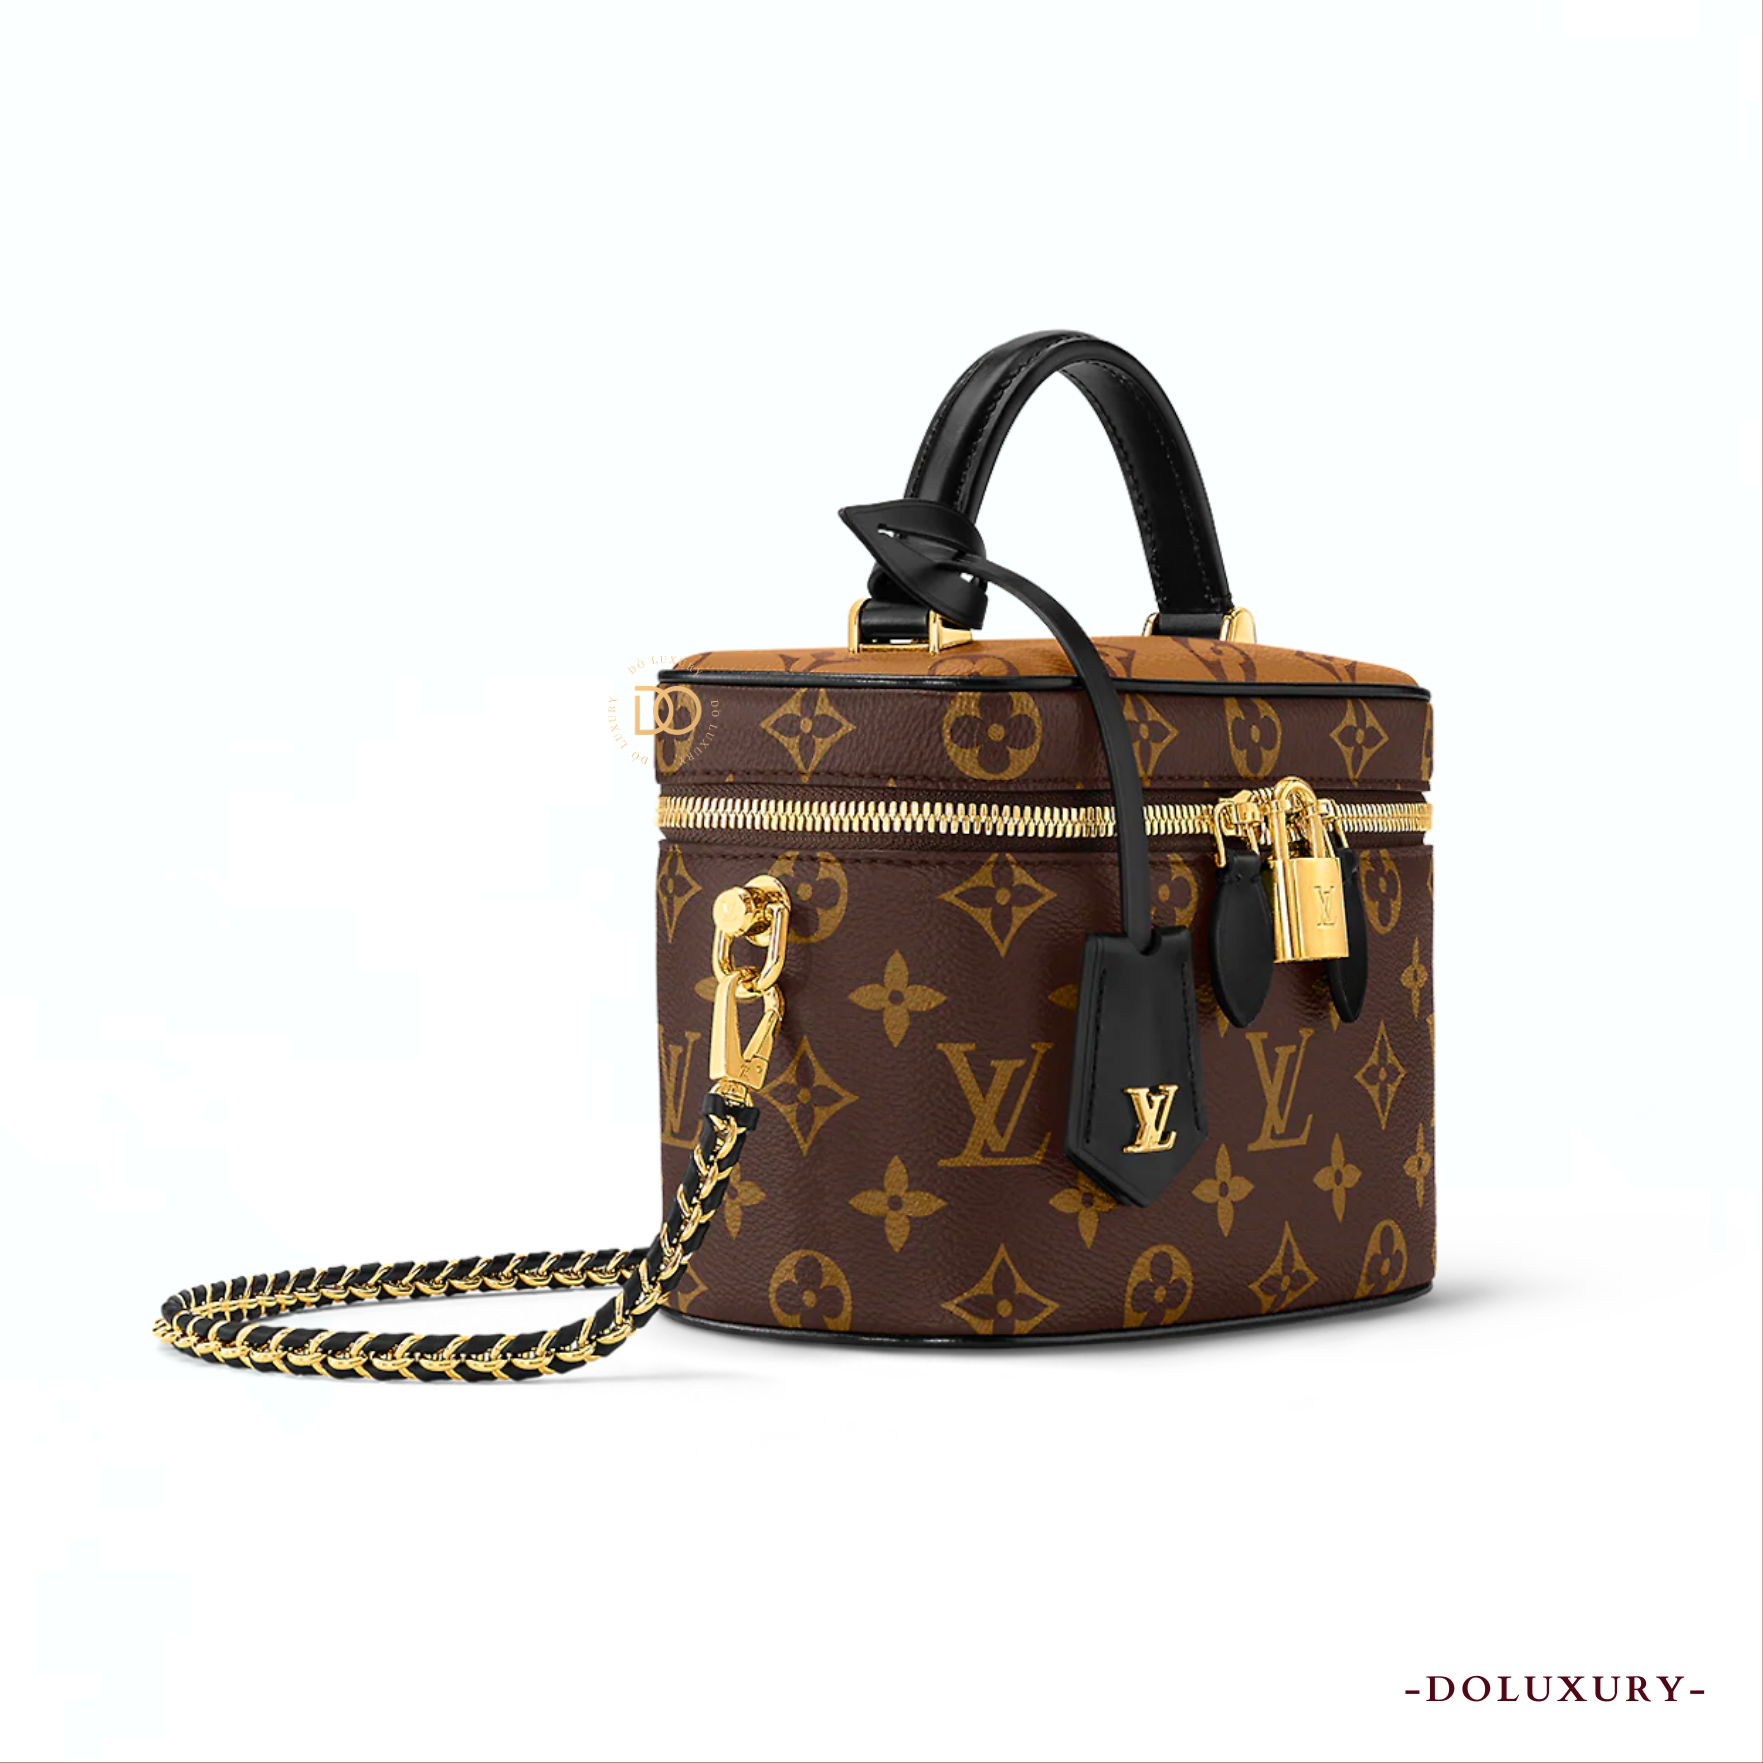 Brown Monogram Vanity Pm Shoulder Bag Authentic New  The Lady Bag